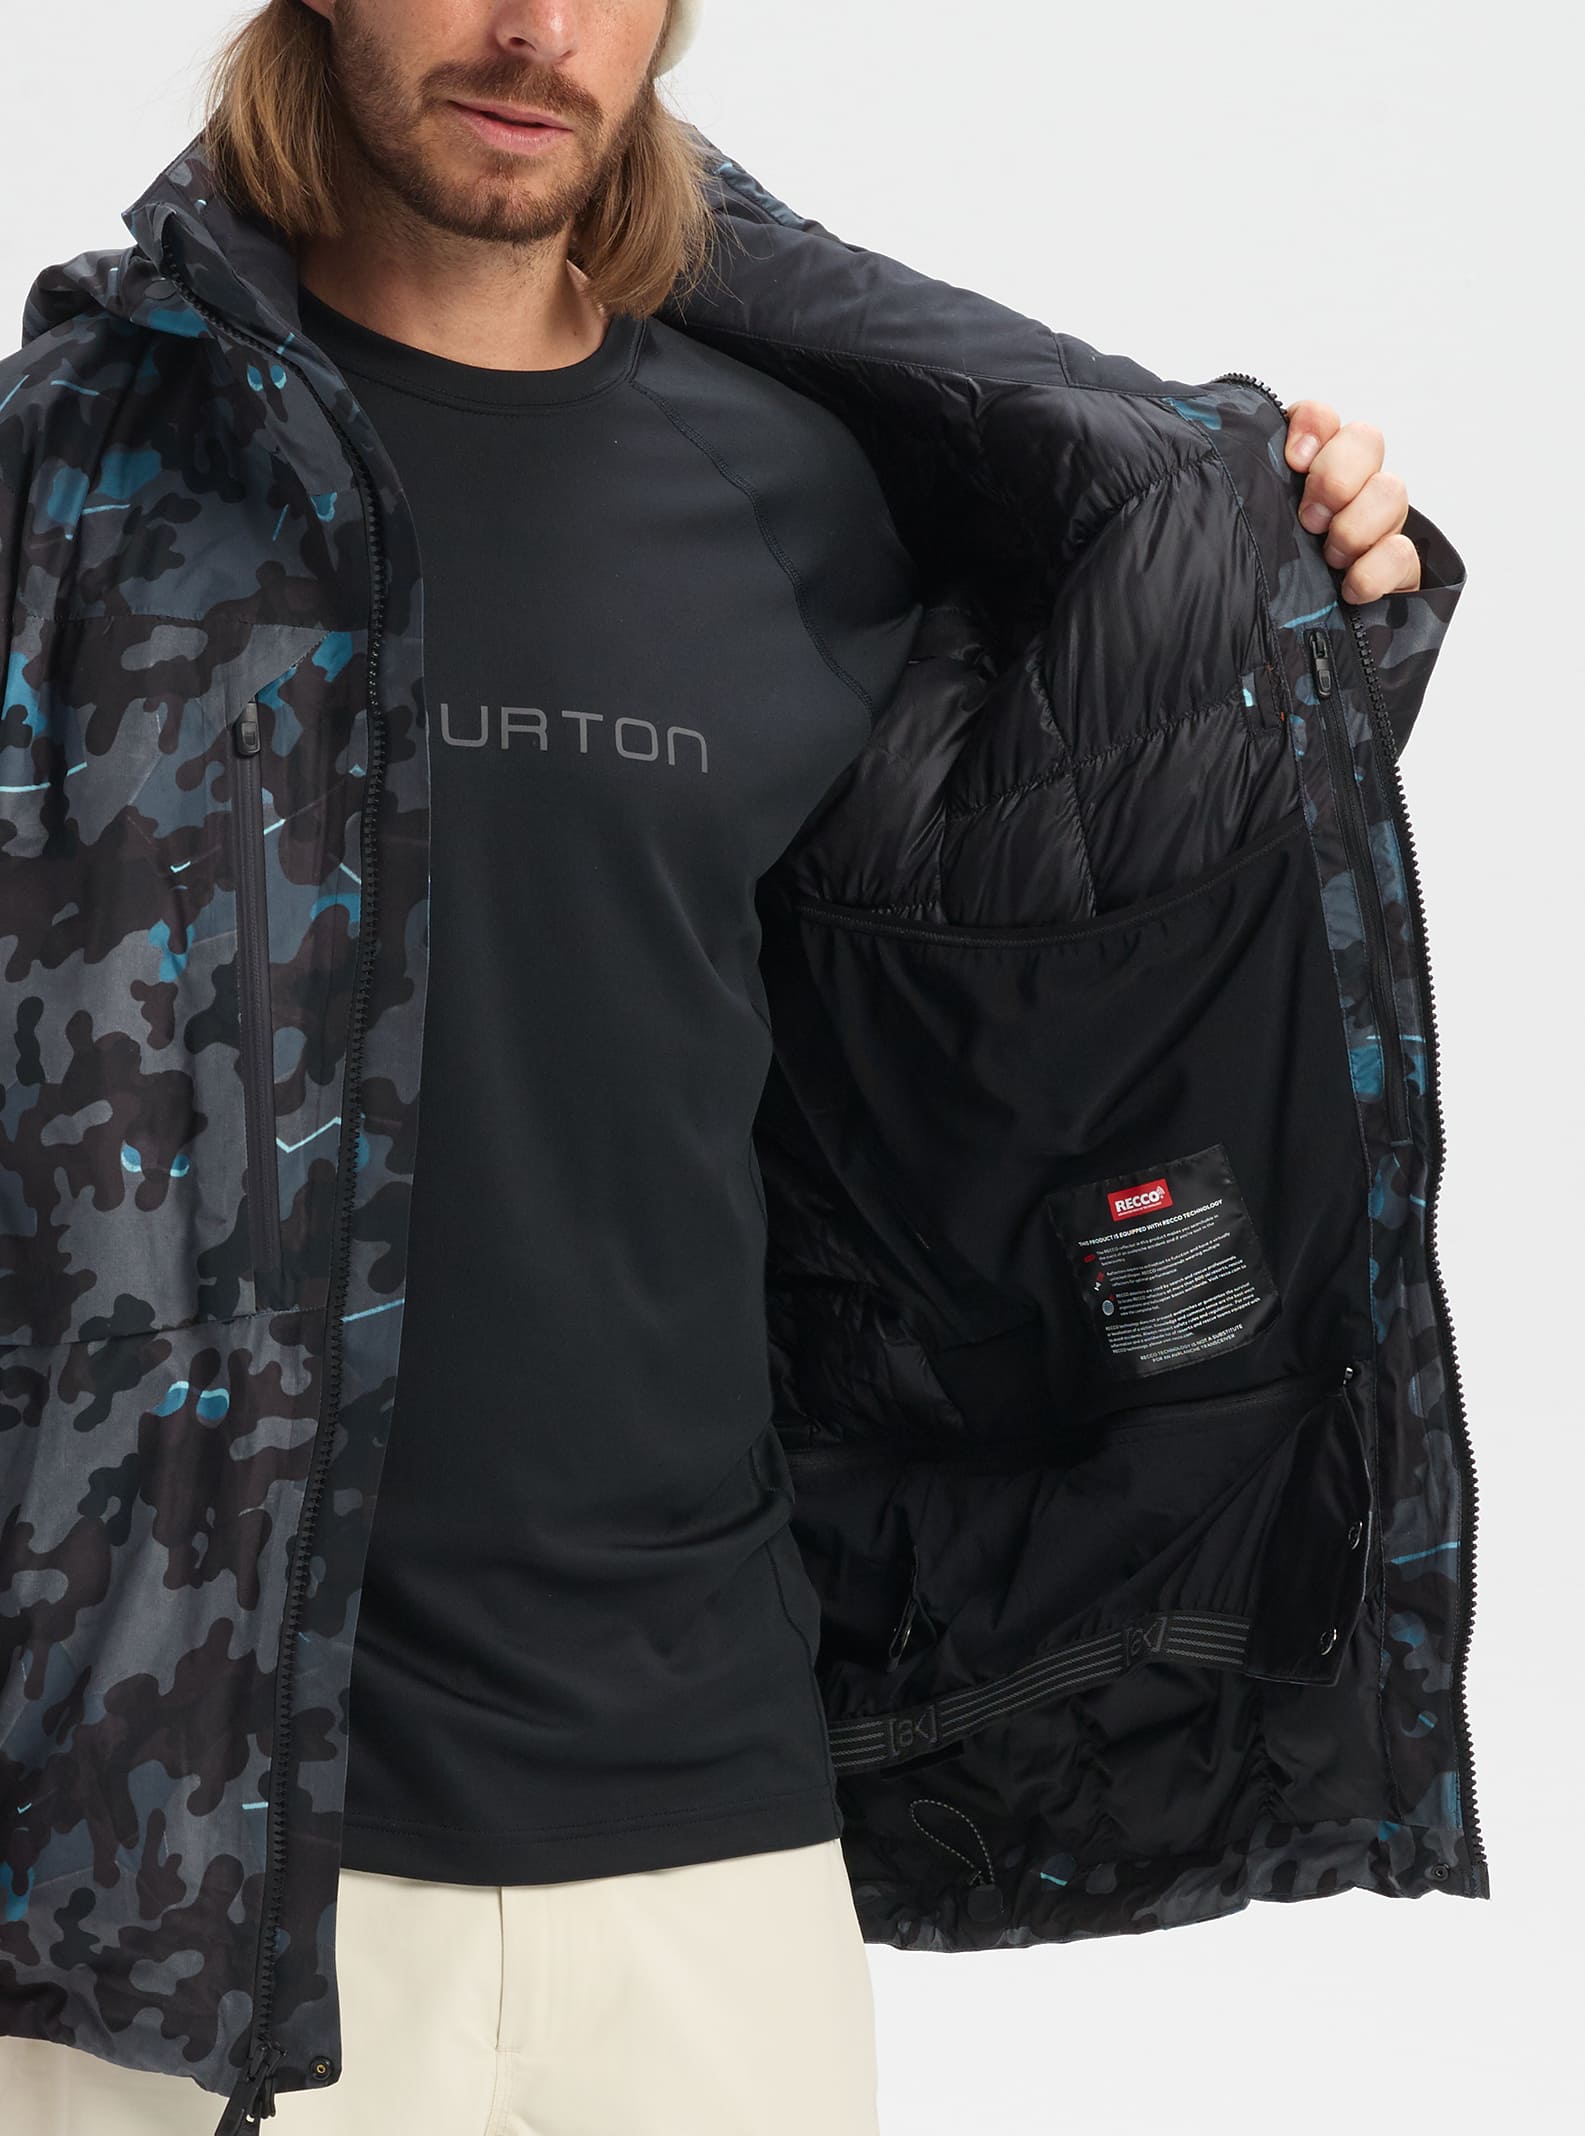 Men's Burton [ak] GORE‑TEX 2L LZ Down Jacket | Burton.com Winter 2020 ES